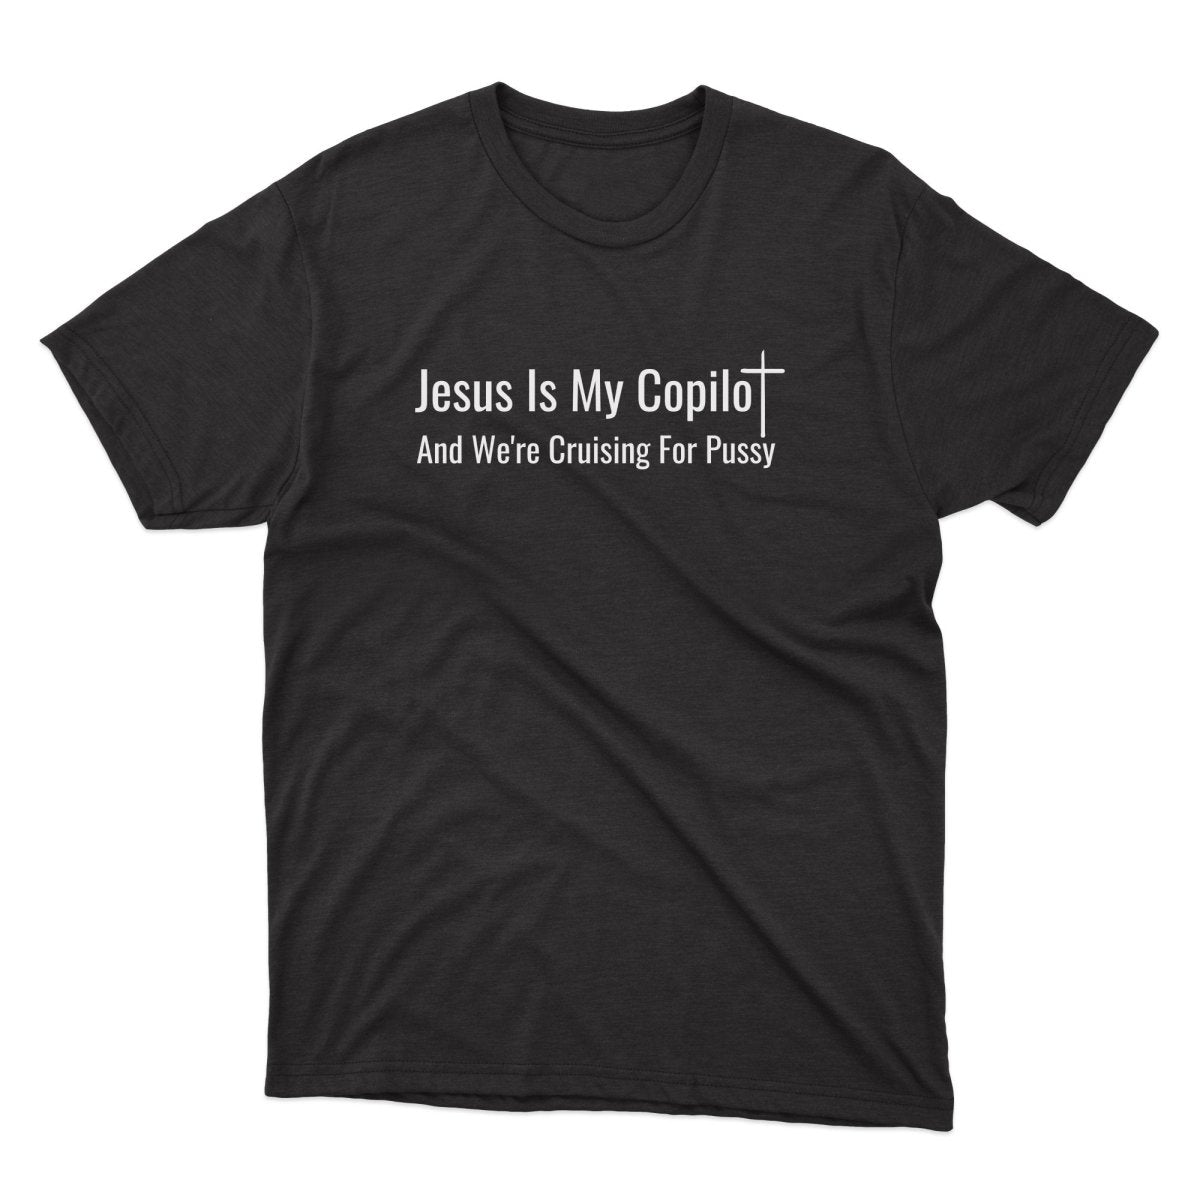 Jesus Copilot Shirt - stickerbullJesus Copilot ShirtShirtsPrintifystickerbull21880911430943786577BlackSa black t - shirt with the words jesus is my copilot and we